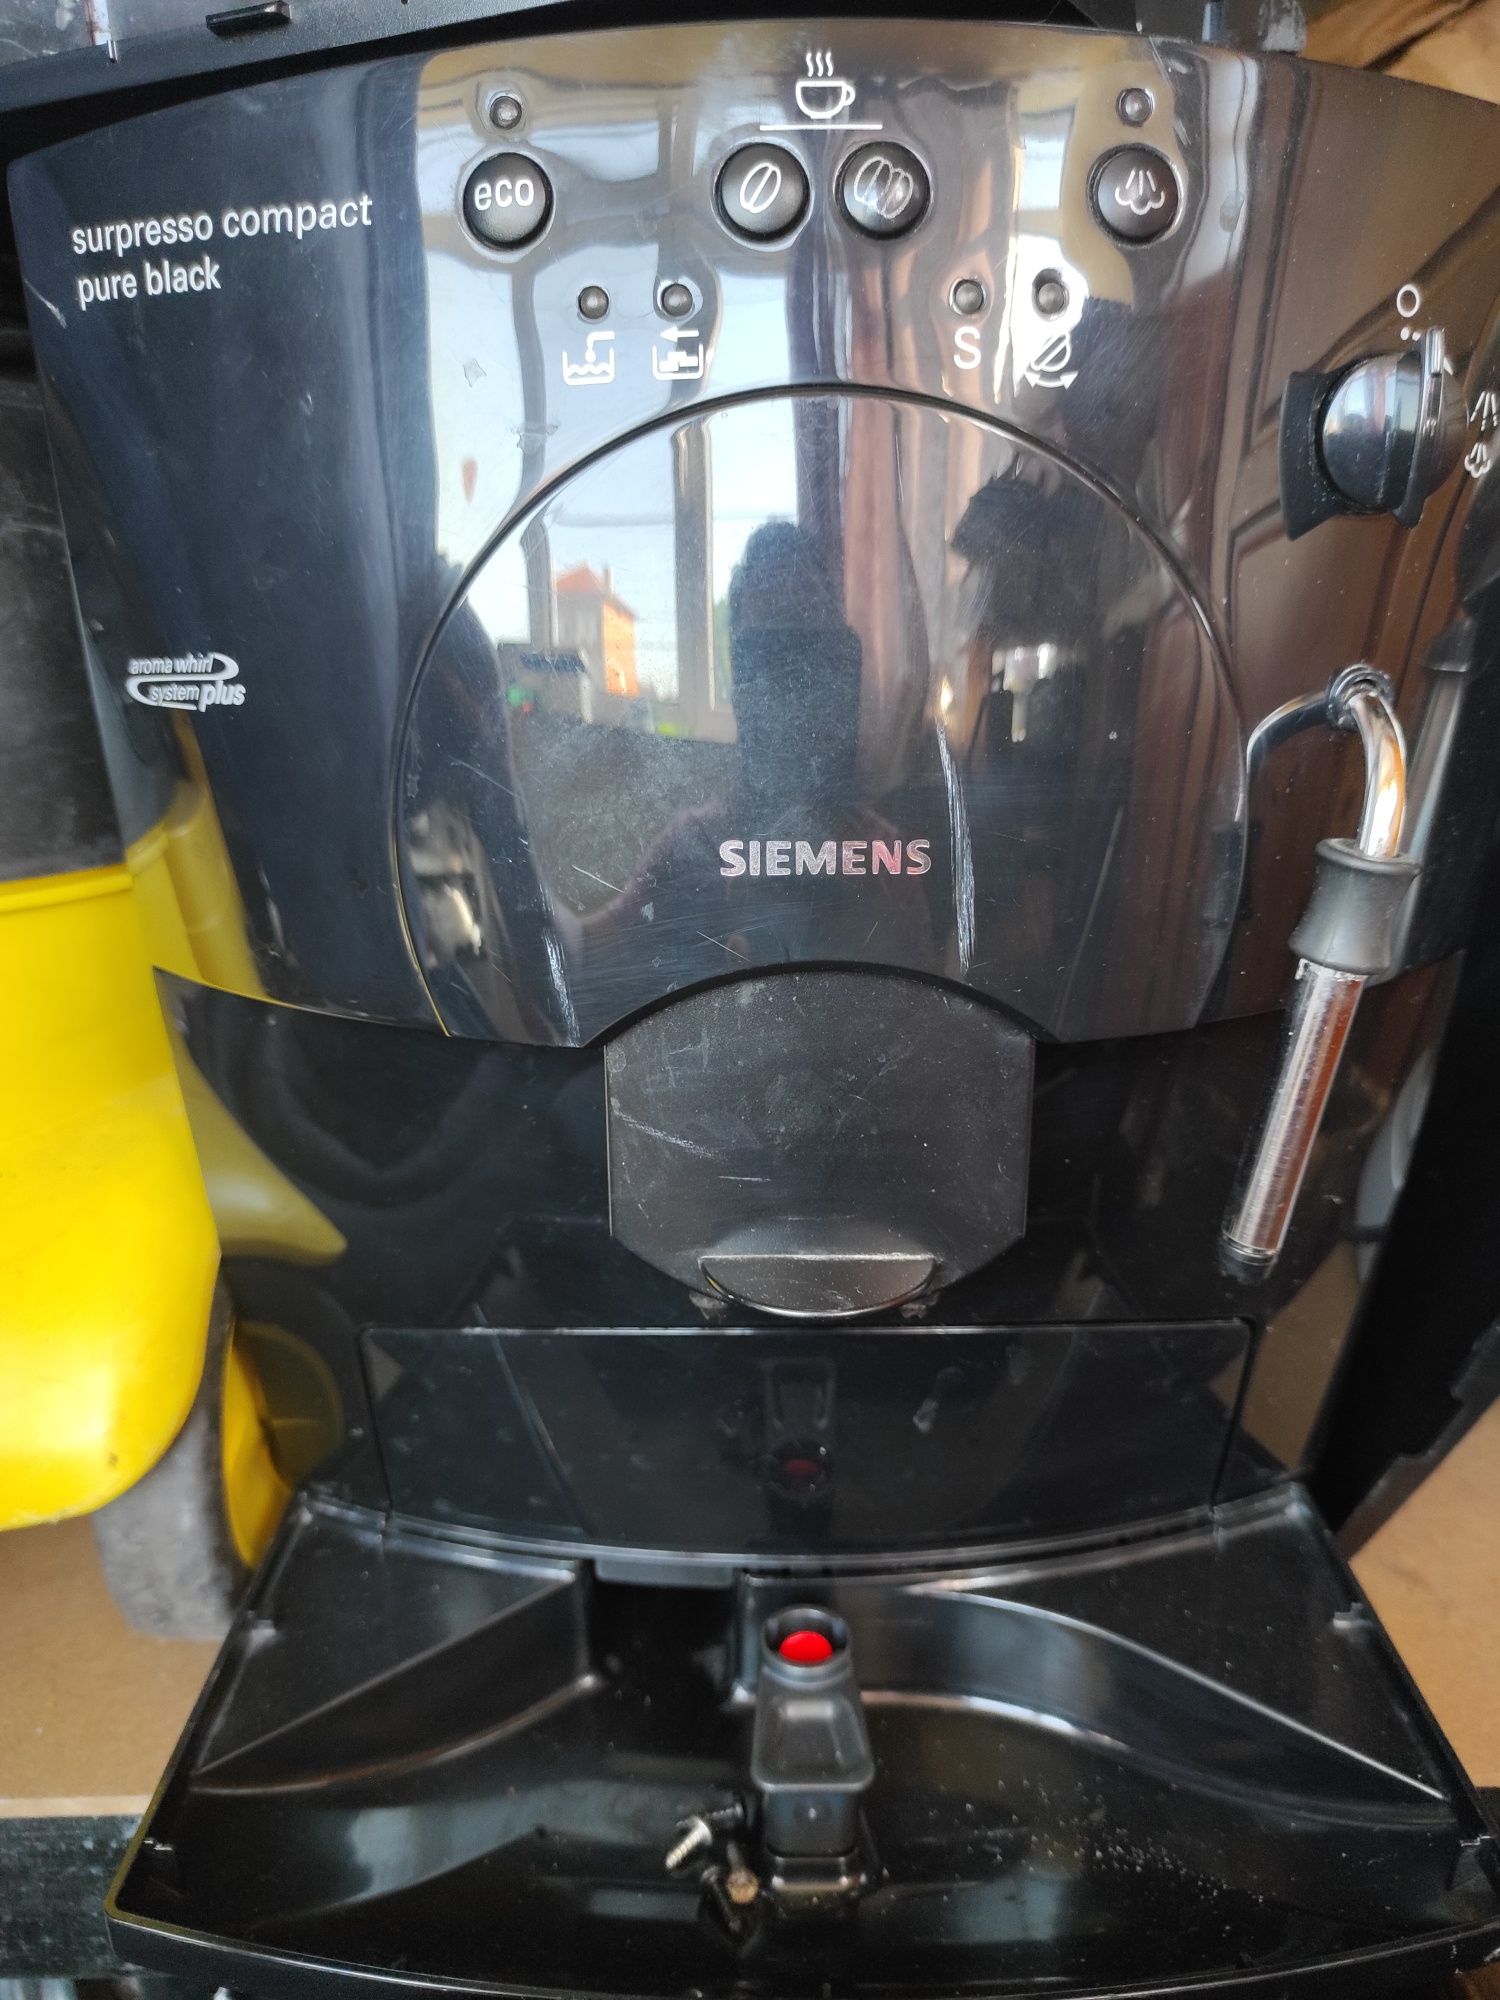 2бр.Кафемашина/каферобот  Сименс/ Siemens Surpresso Compact - на части